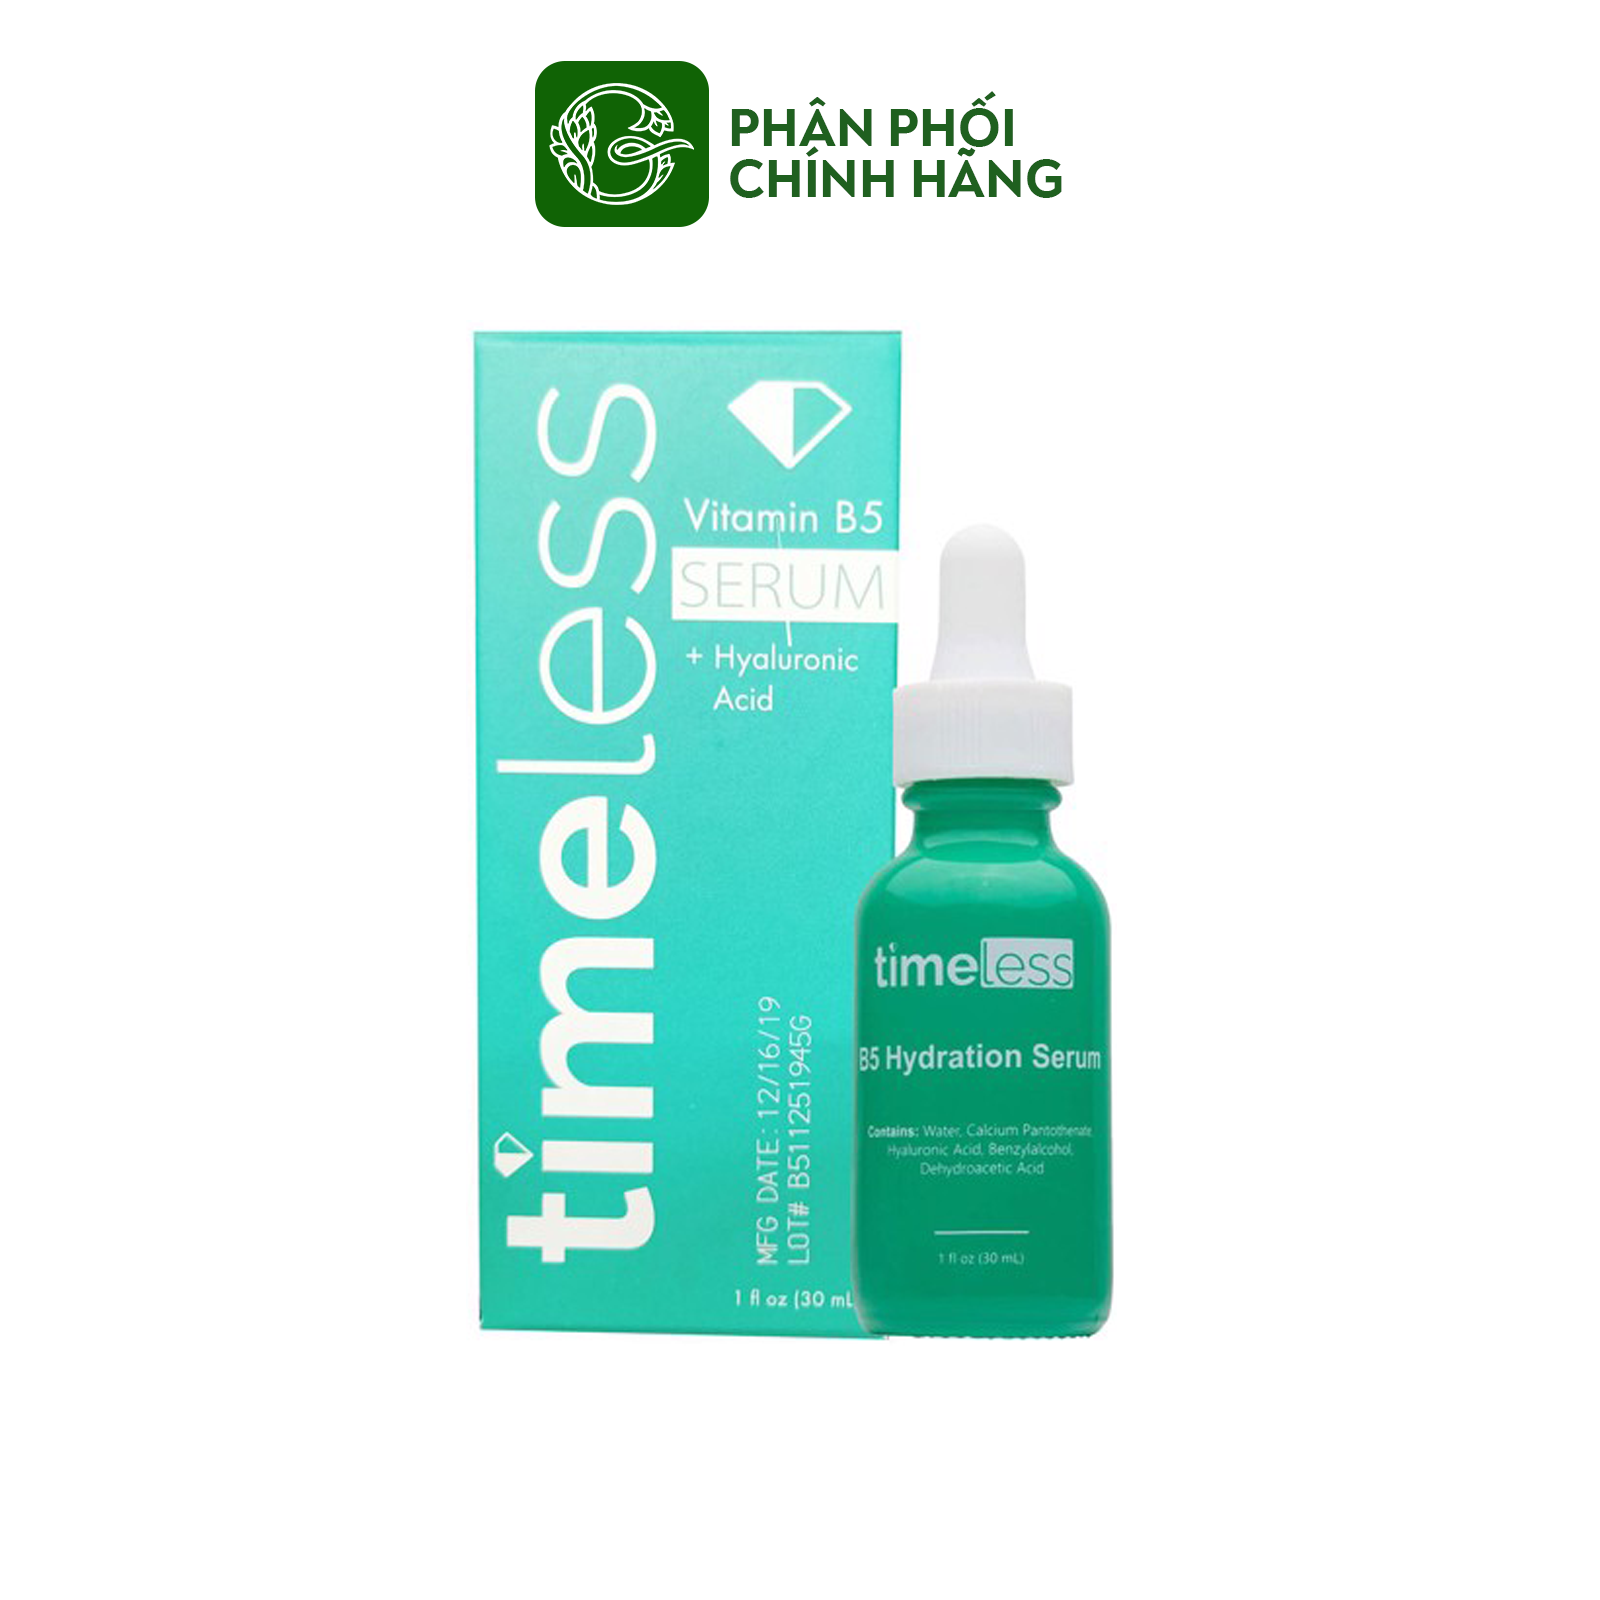 Tinh chất Timeless Pure Natural Vitamin B5 + Hyaluronic Acid Serum 30ml